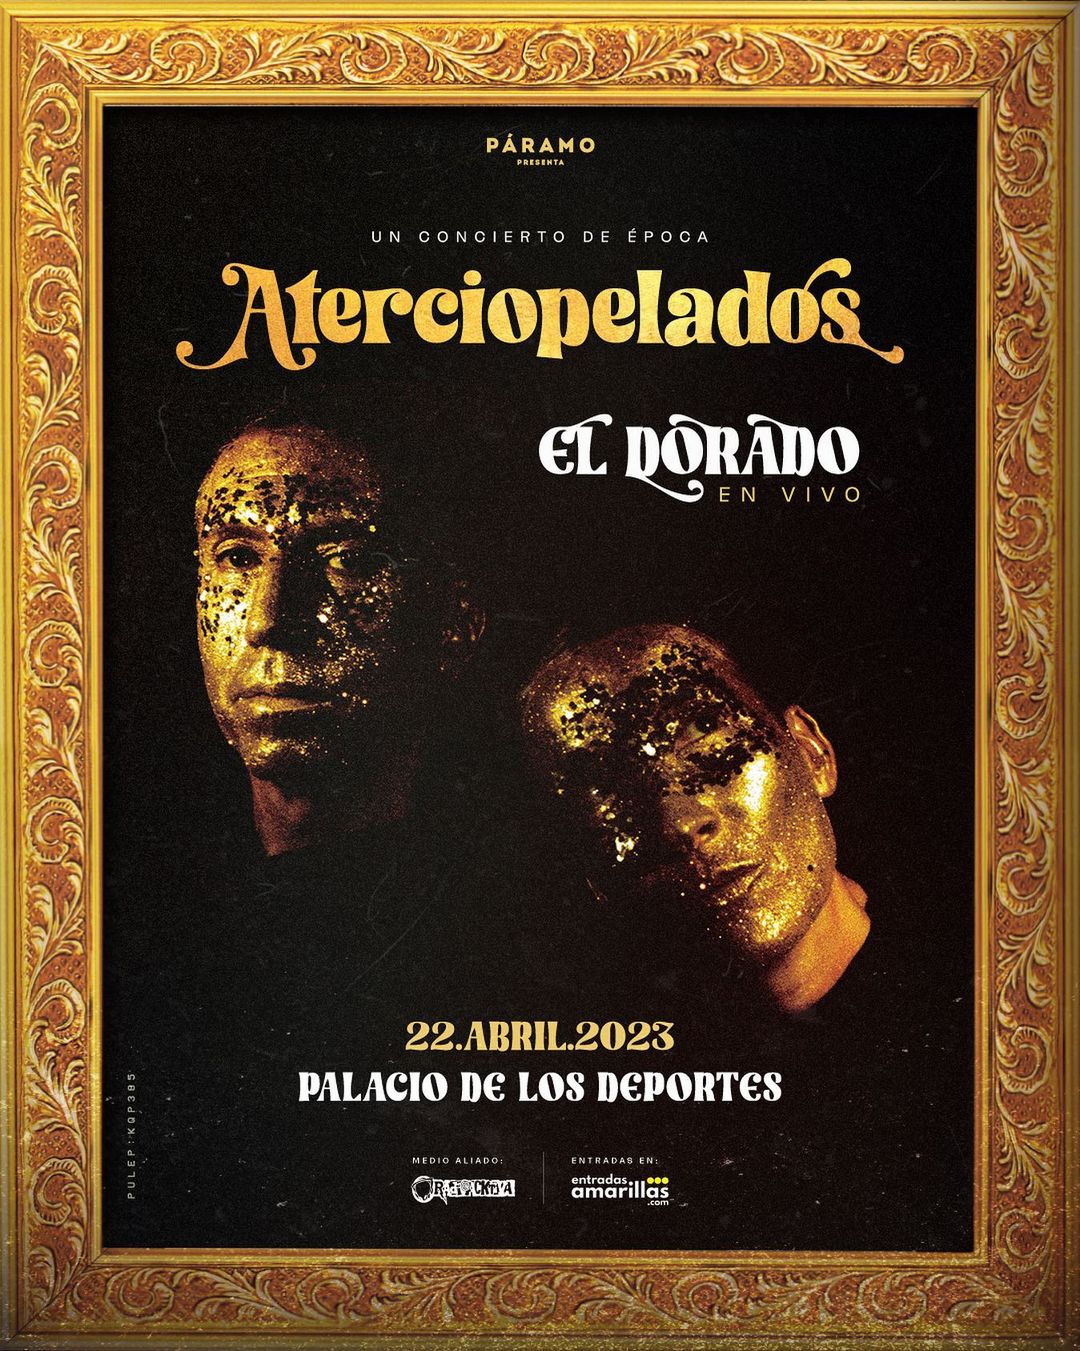 At the Palacio de los Deportes, Aterciopelados will celebrate the 28th anniversary of their second album